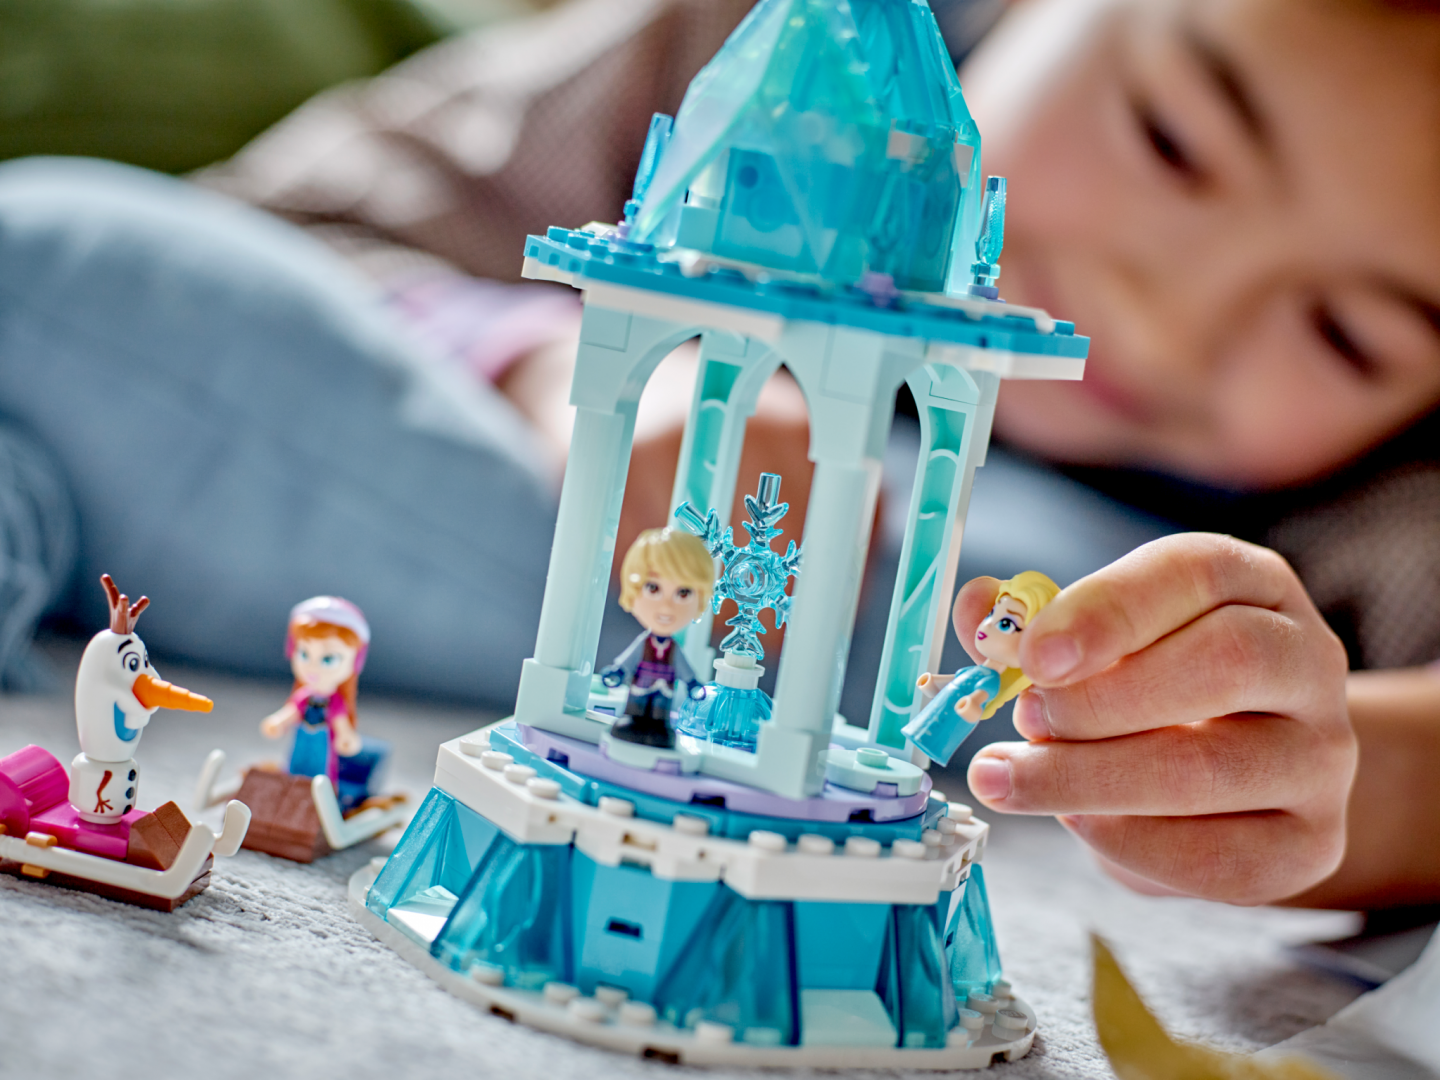 Anna and Elsa's Magical Carousel